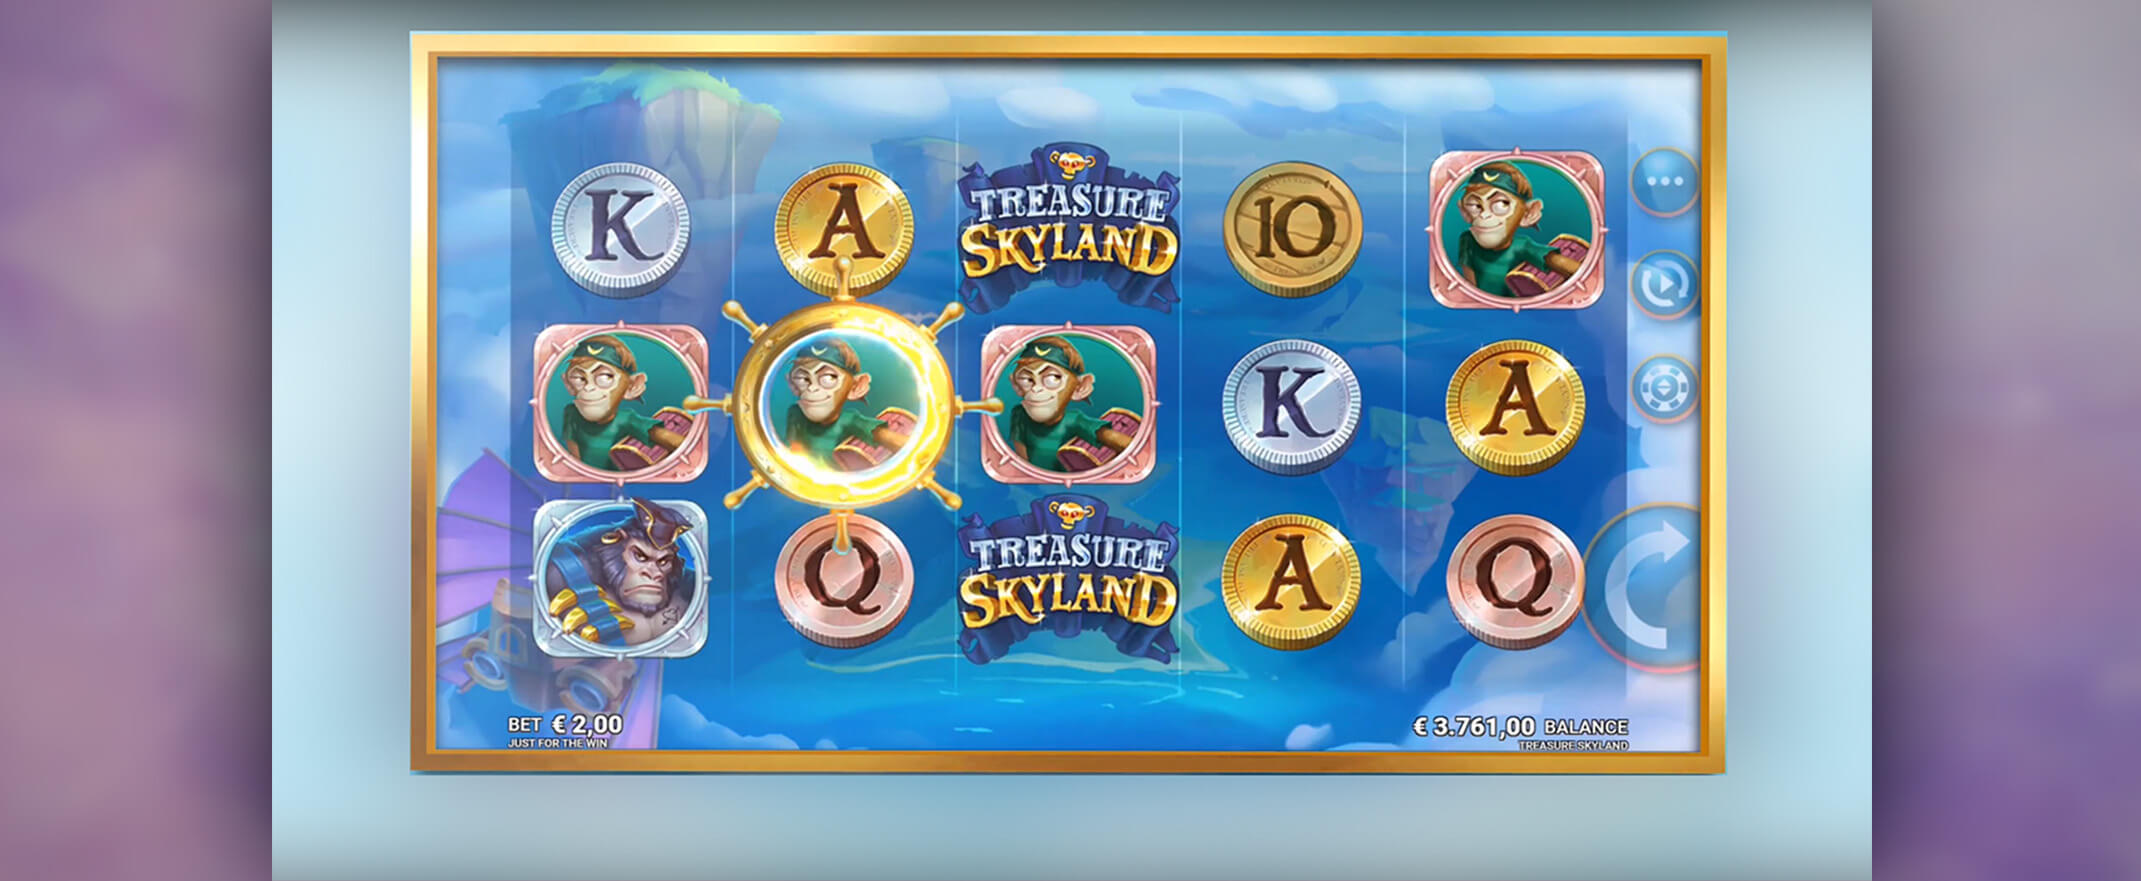 Treasure Skyland slot review - image of the reels and symbols